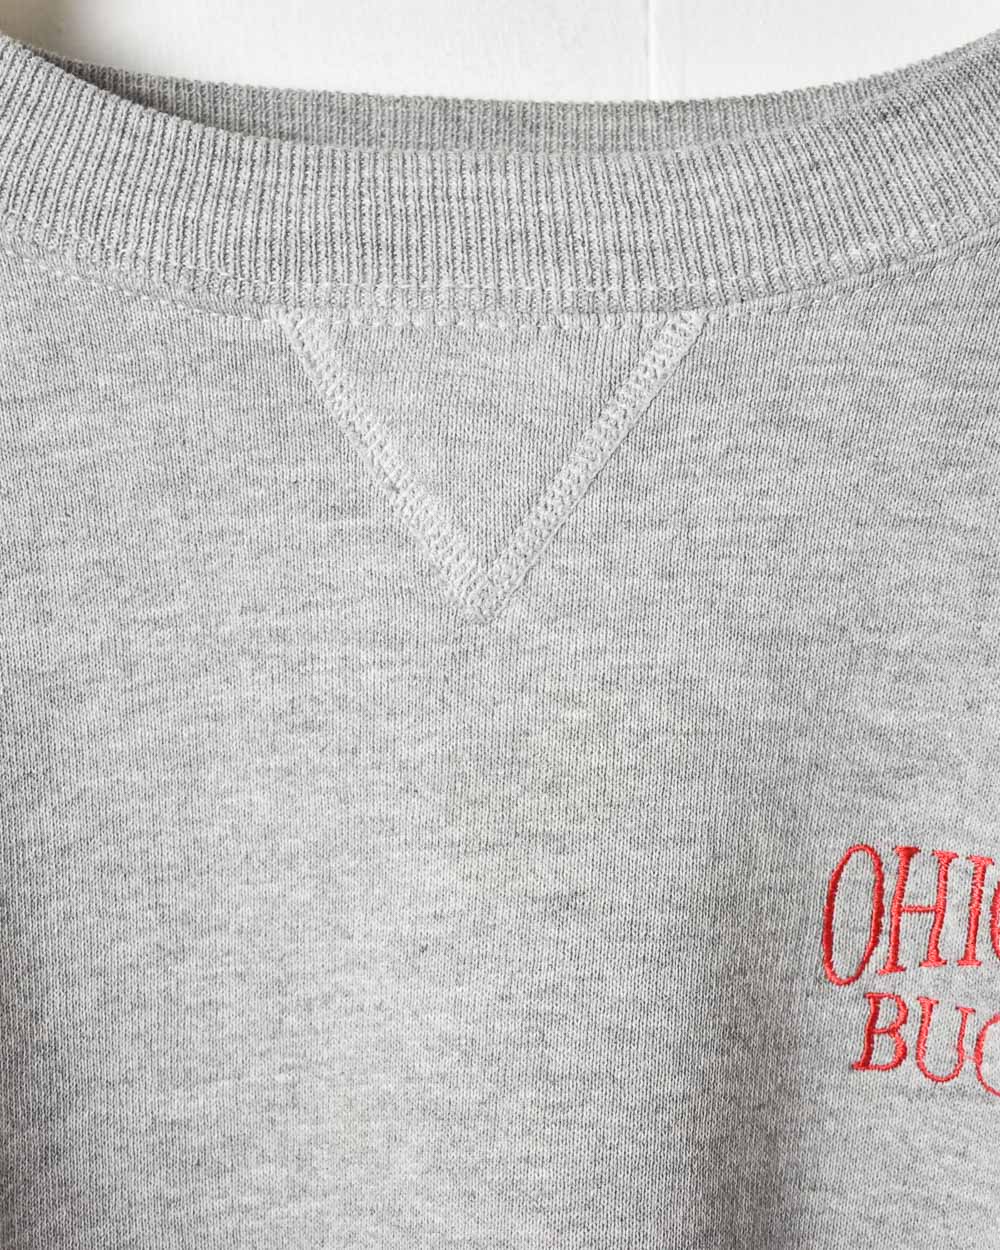 Stone Russell Athletic Ohio State Buckeyes Sweatshirt - Small